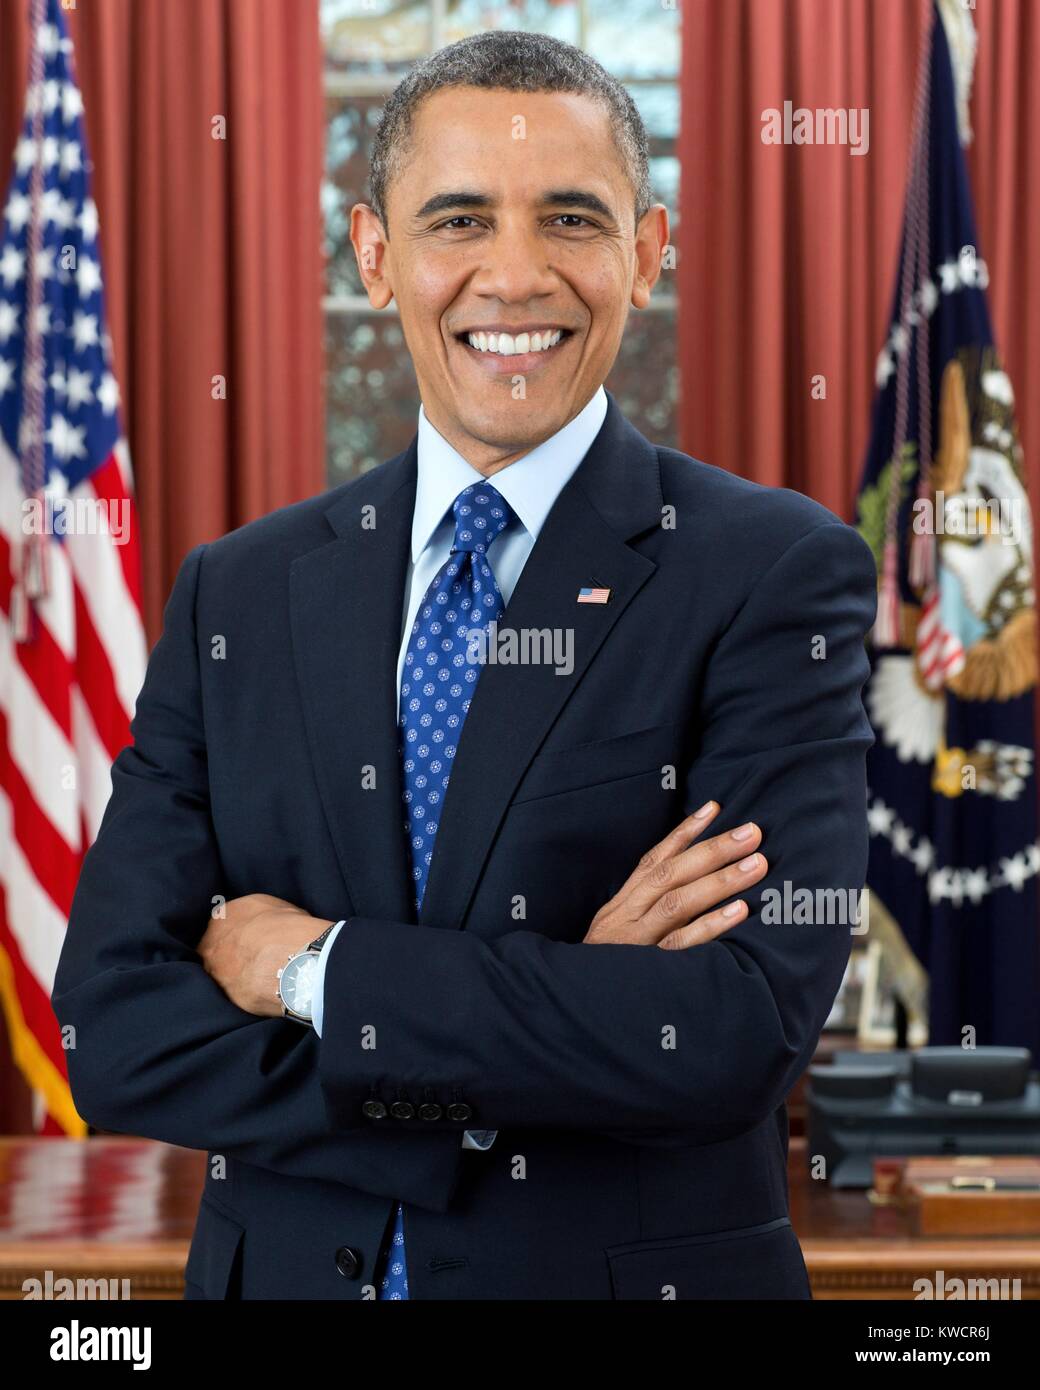 Präsident Barack Obama offiziell zweiten Begriff Porträt. White House, Oval Office, 6. Dezember 2012. (BSLOC 2015 3 1) Stockfoto